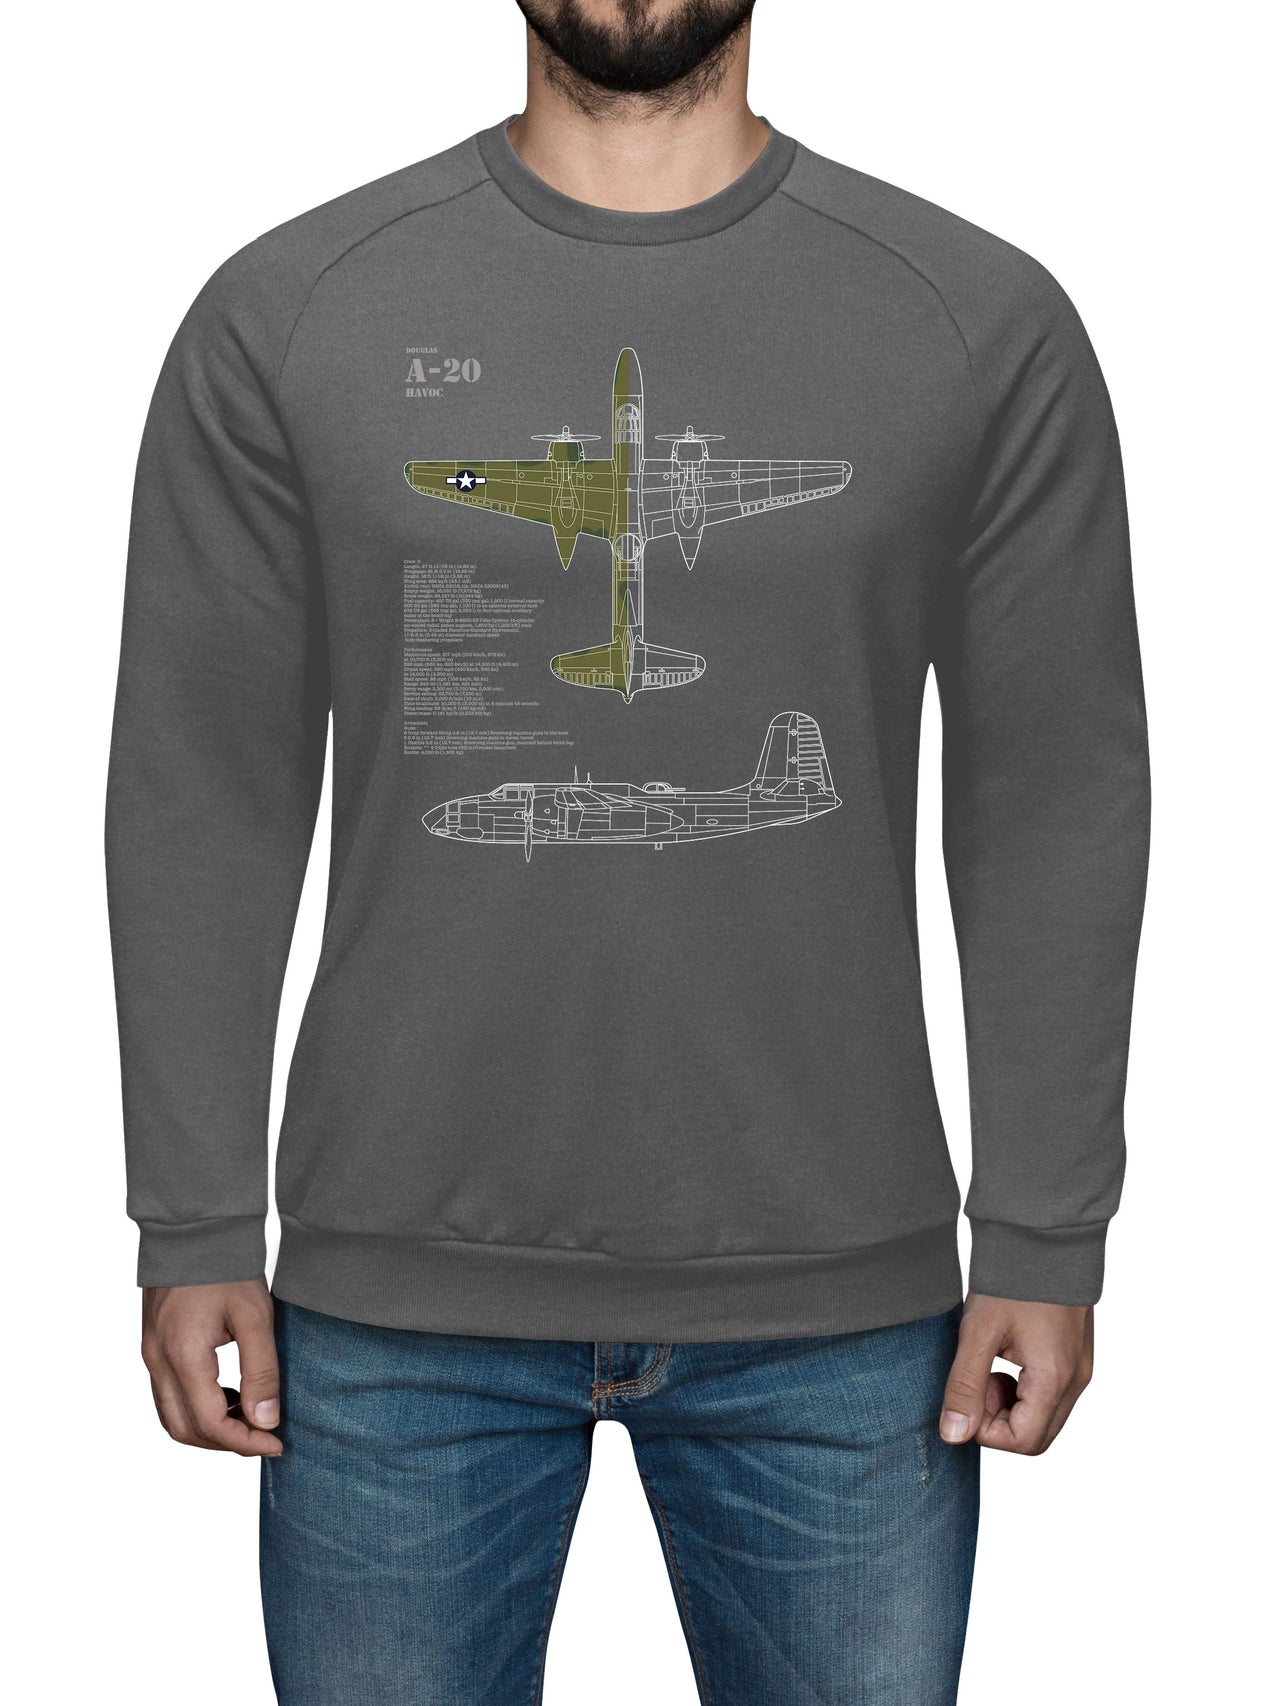 A-20 Havoc - Sweat Shirt